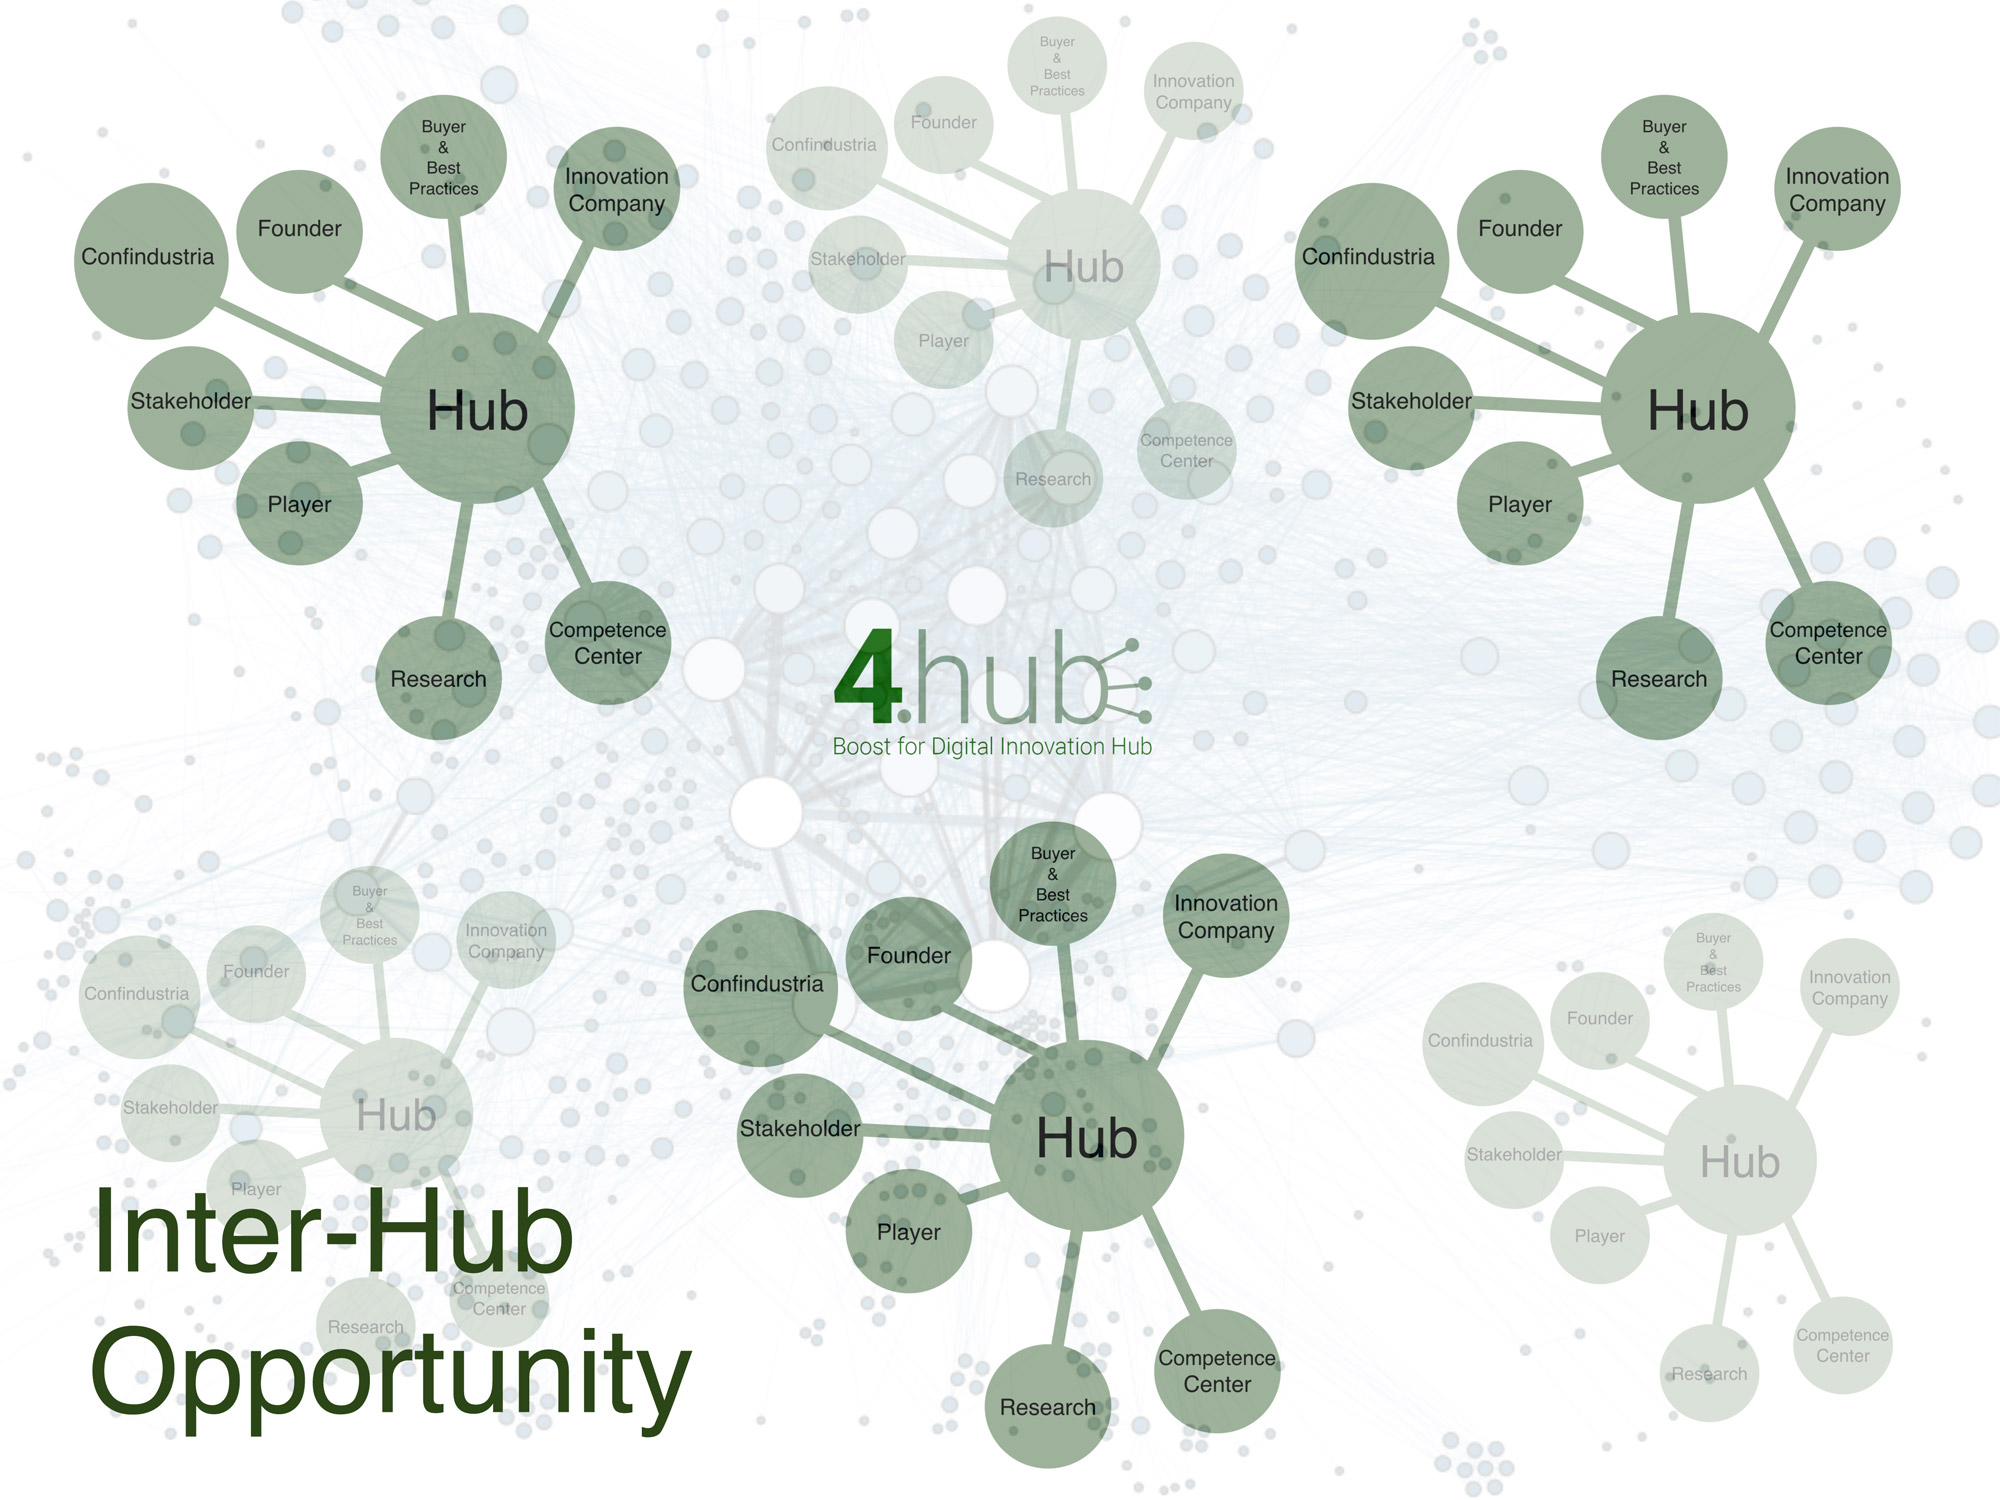 Inter-Hub Opportunity